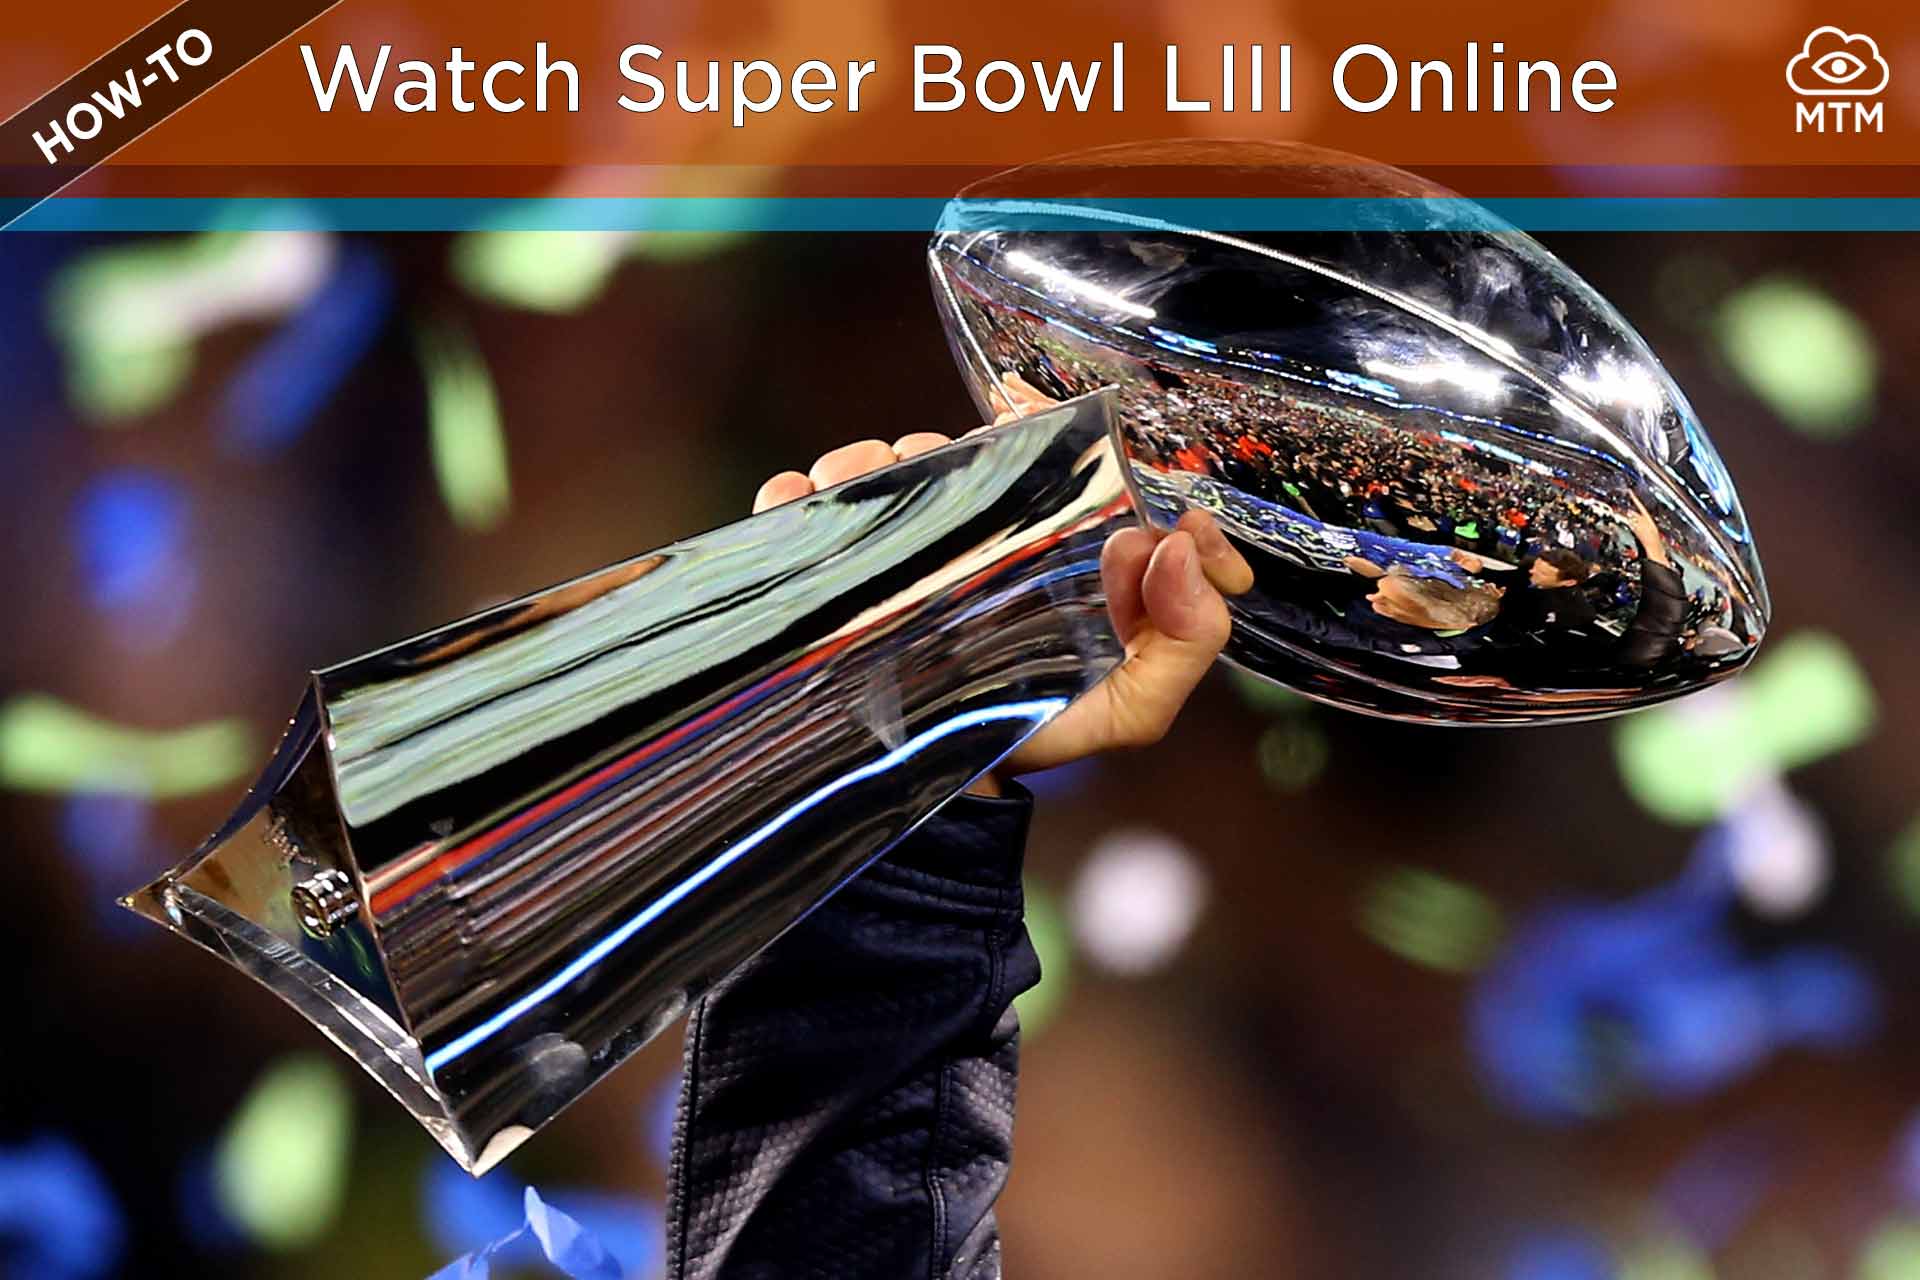 Nola ikusi Super Bowl LIII Live Online doan
